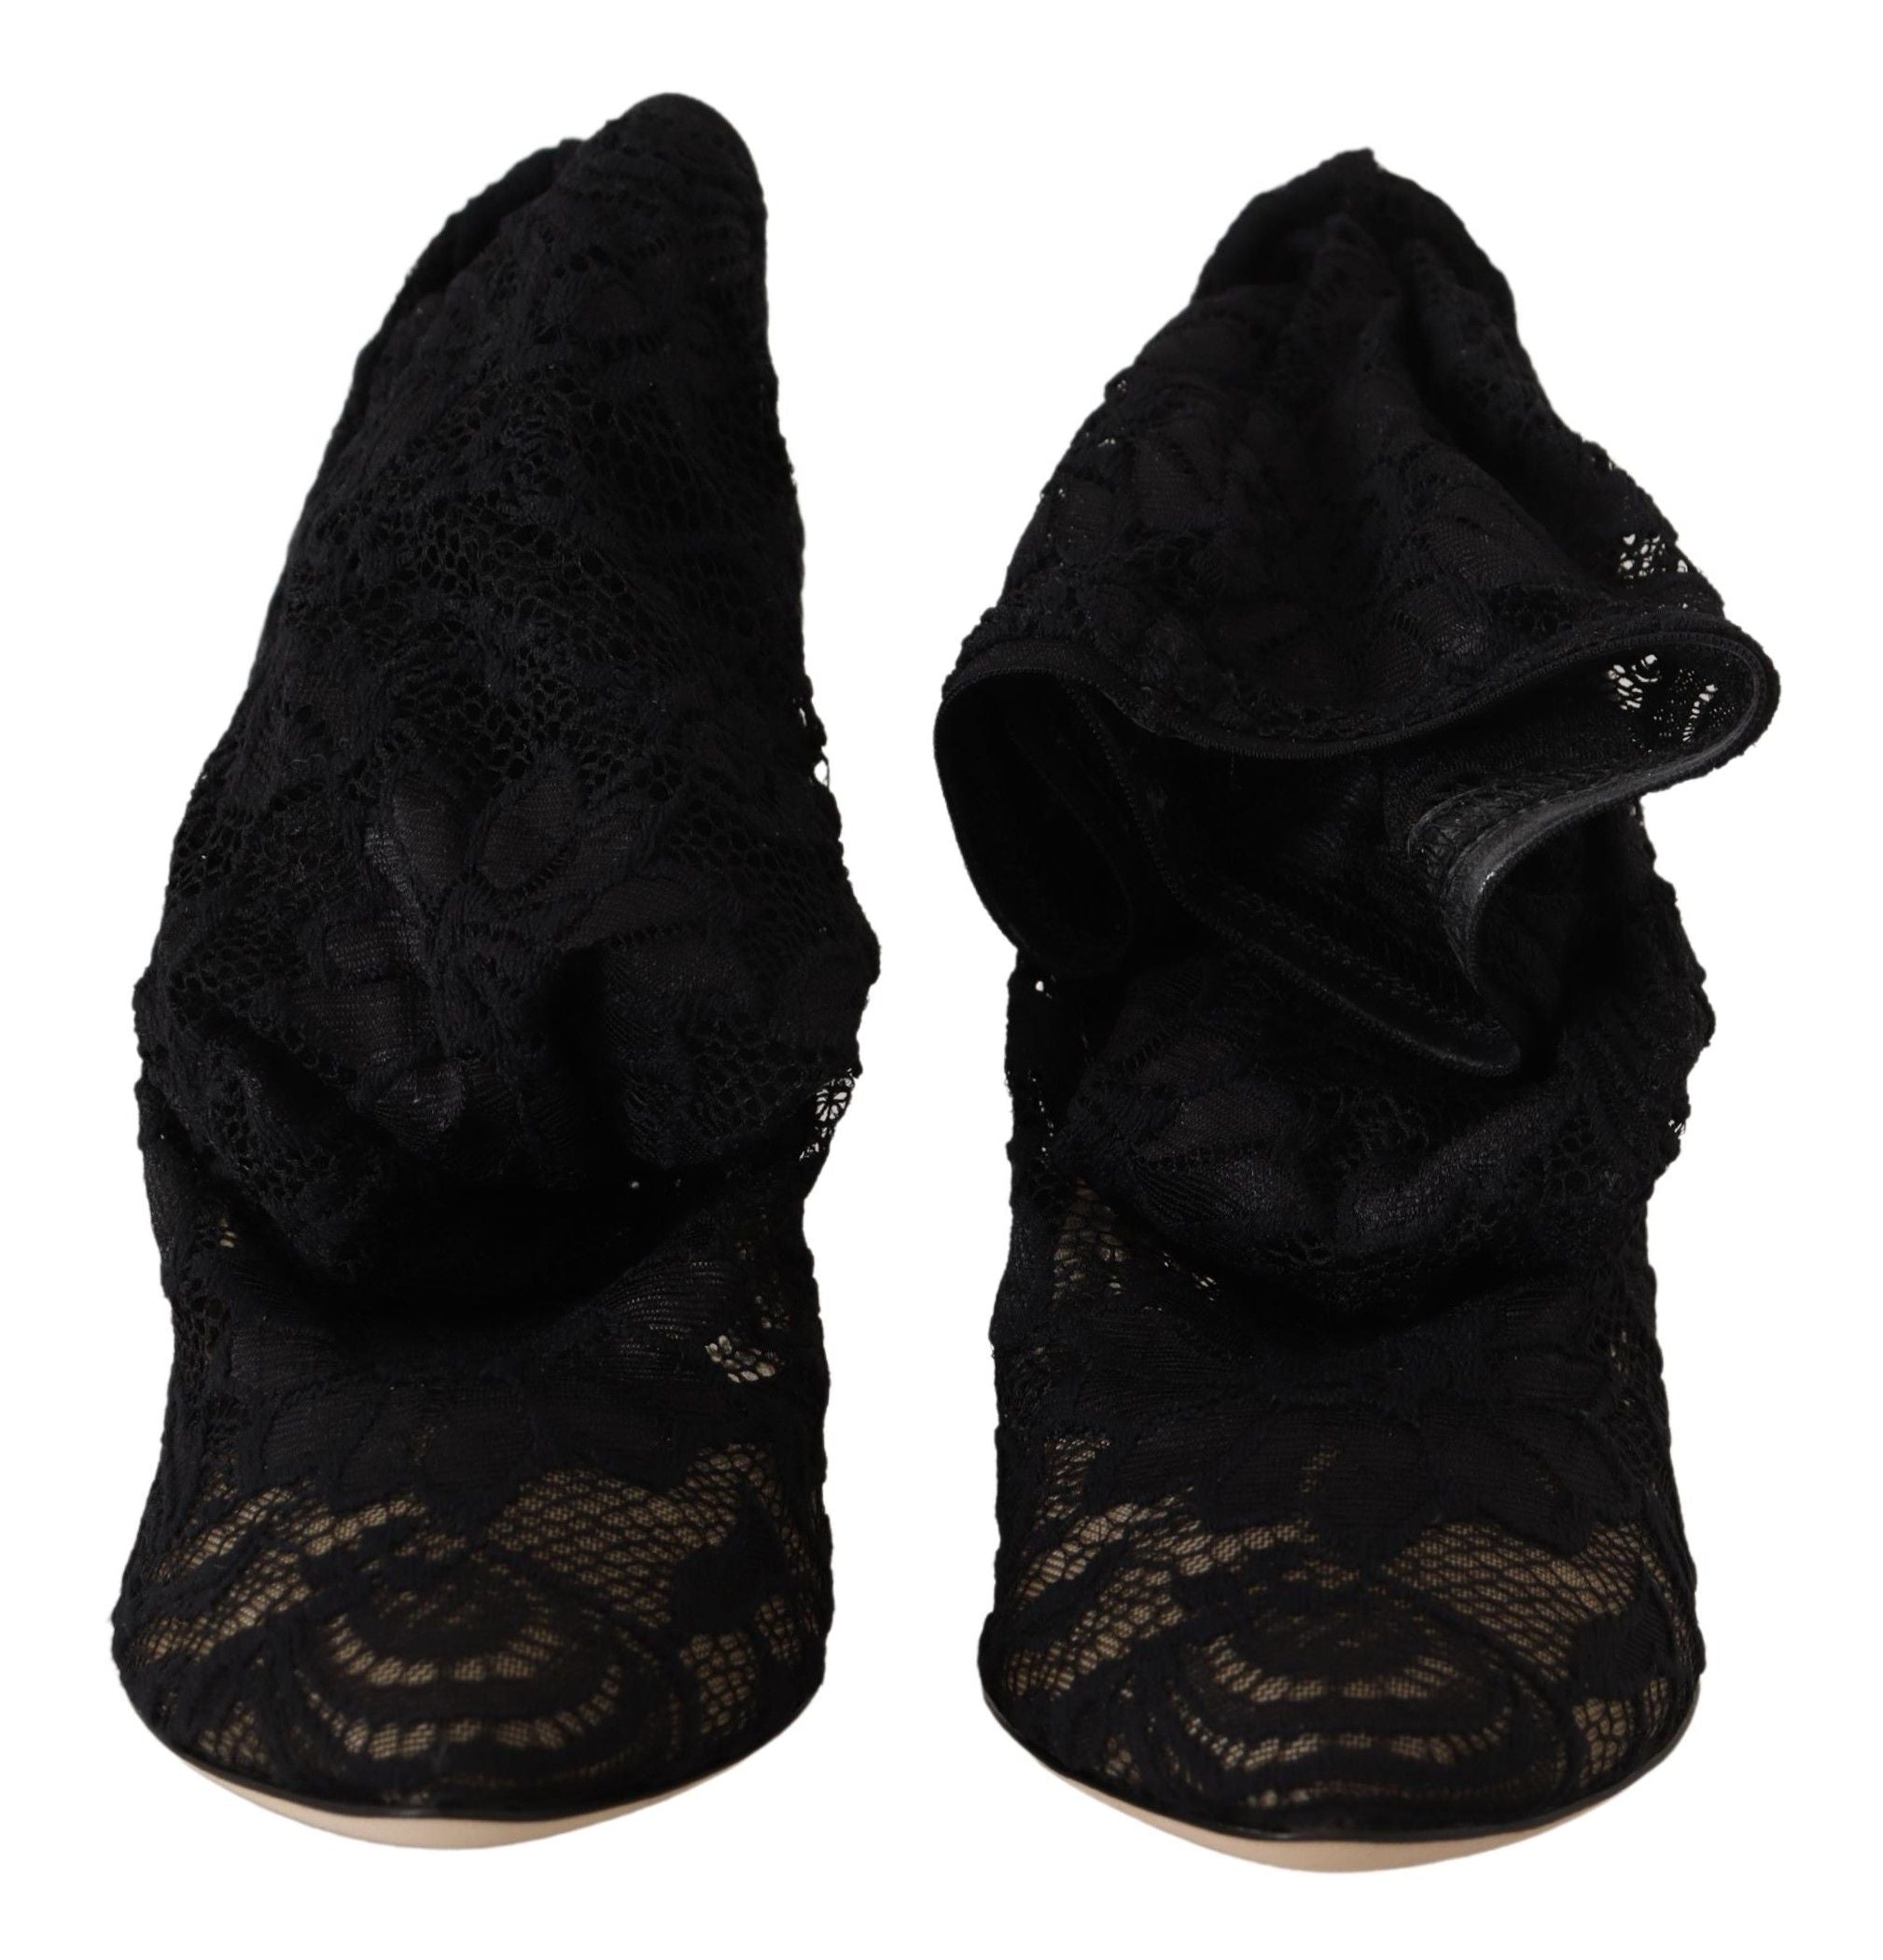 Elegant Stretch Sock Boots in Black